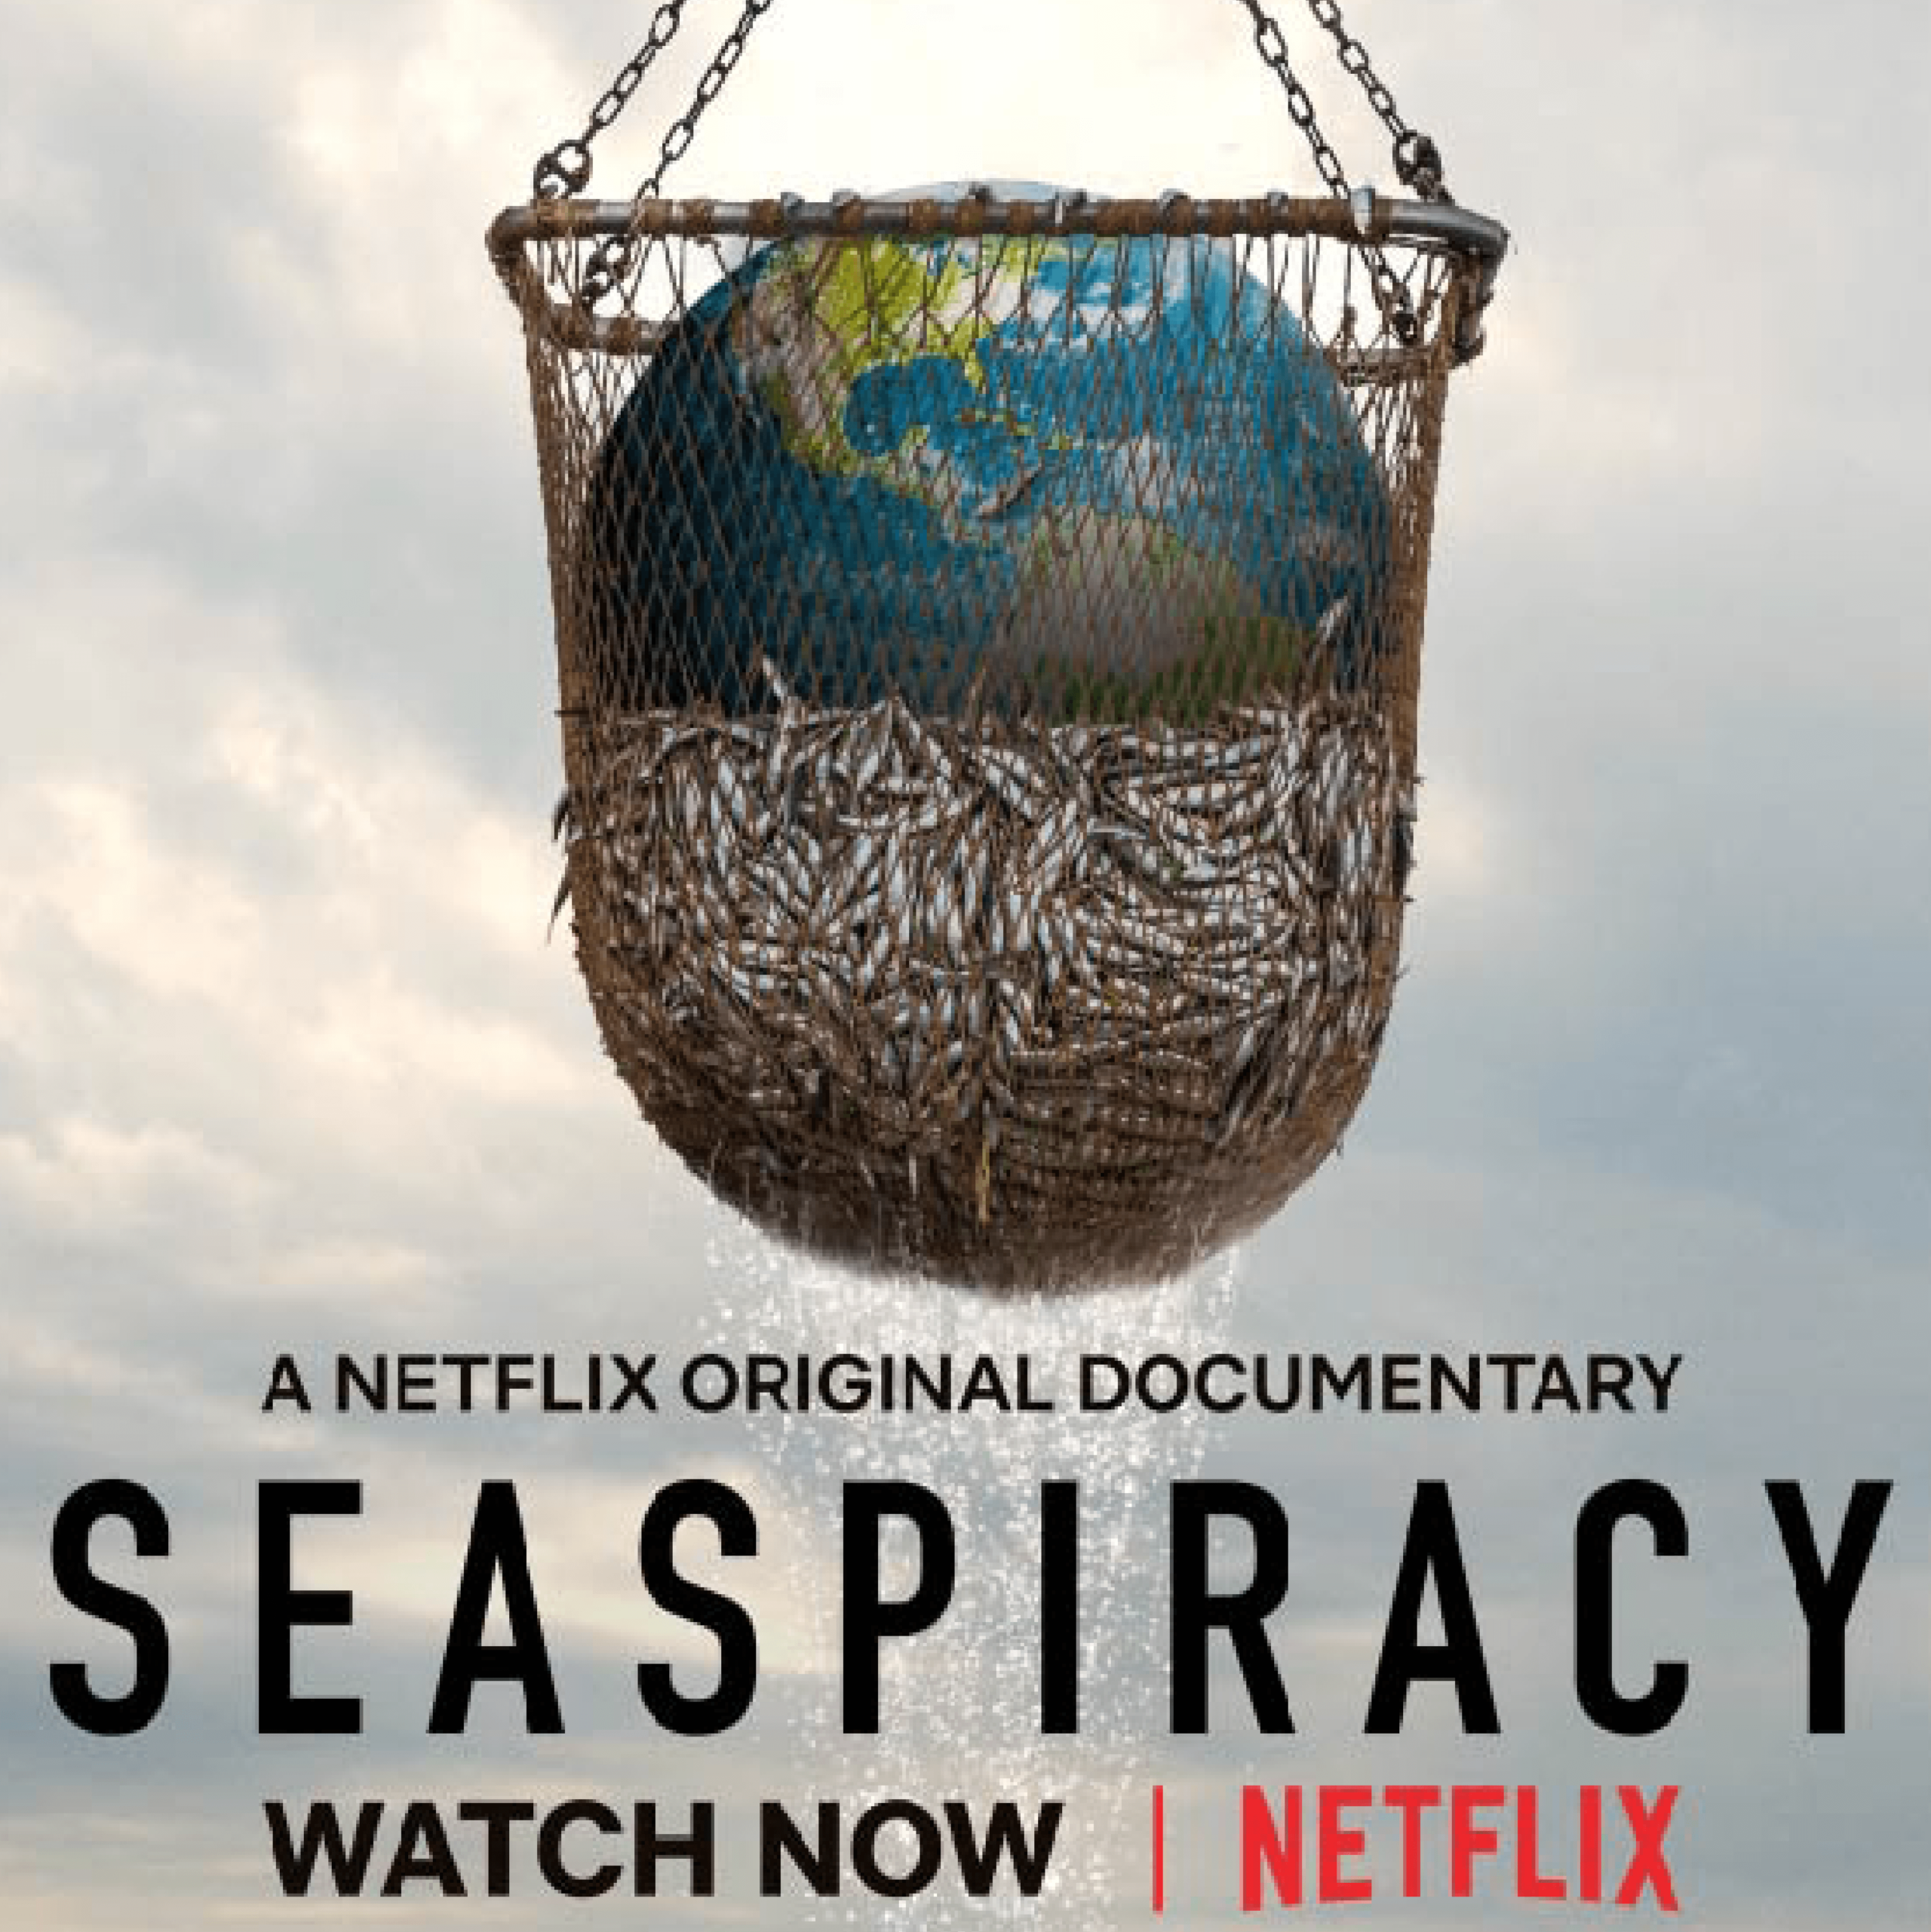 Locandina del documentario Seaspiracy